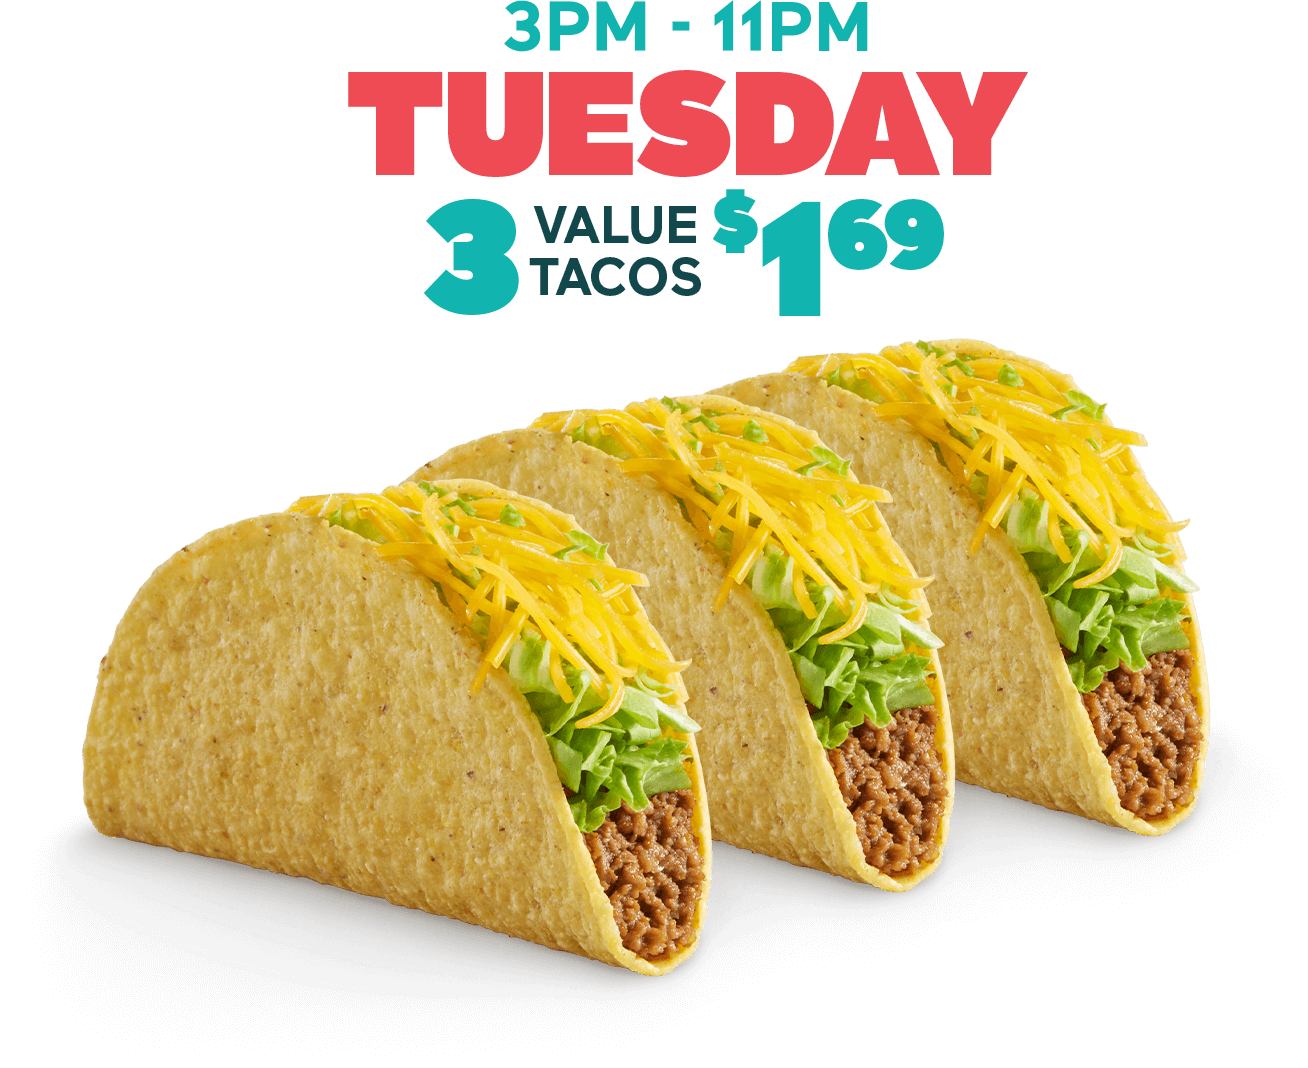 Every Tuesday 3 Regular Tacos $1.69 (mobile heading)